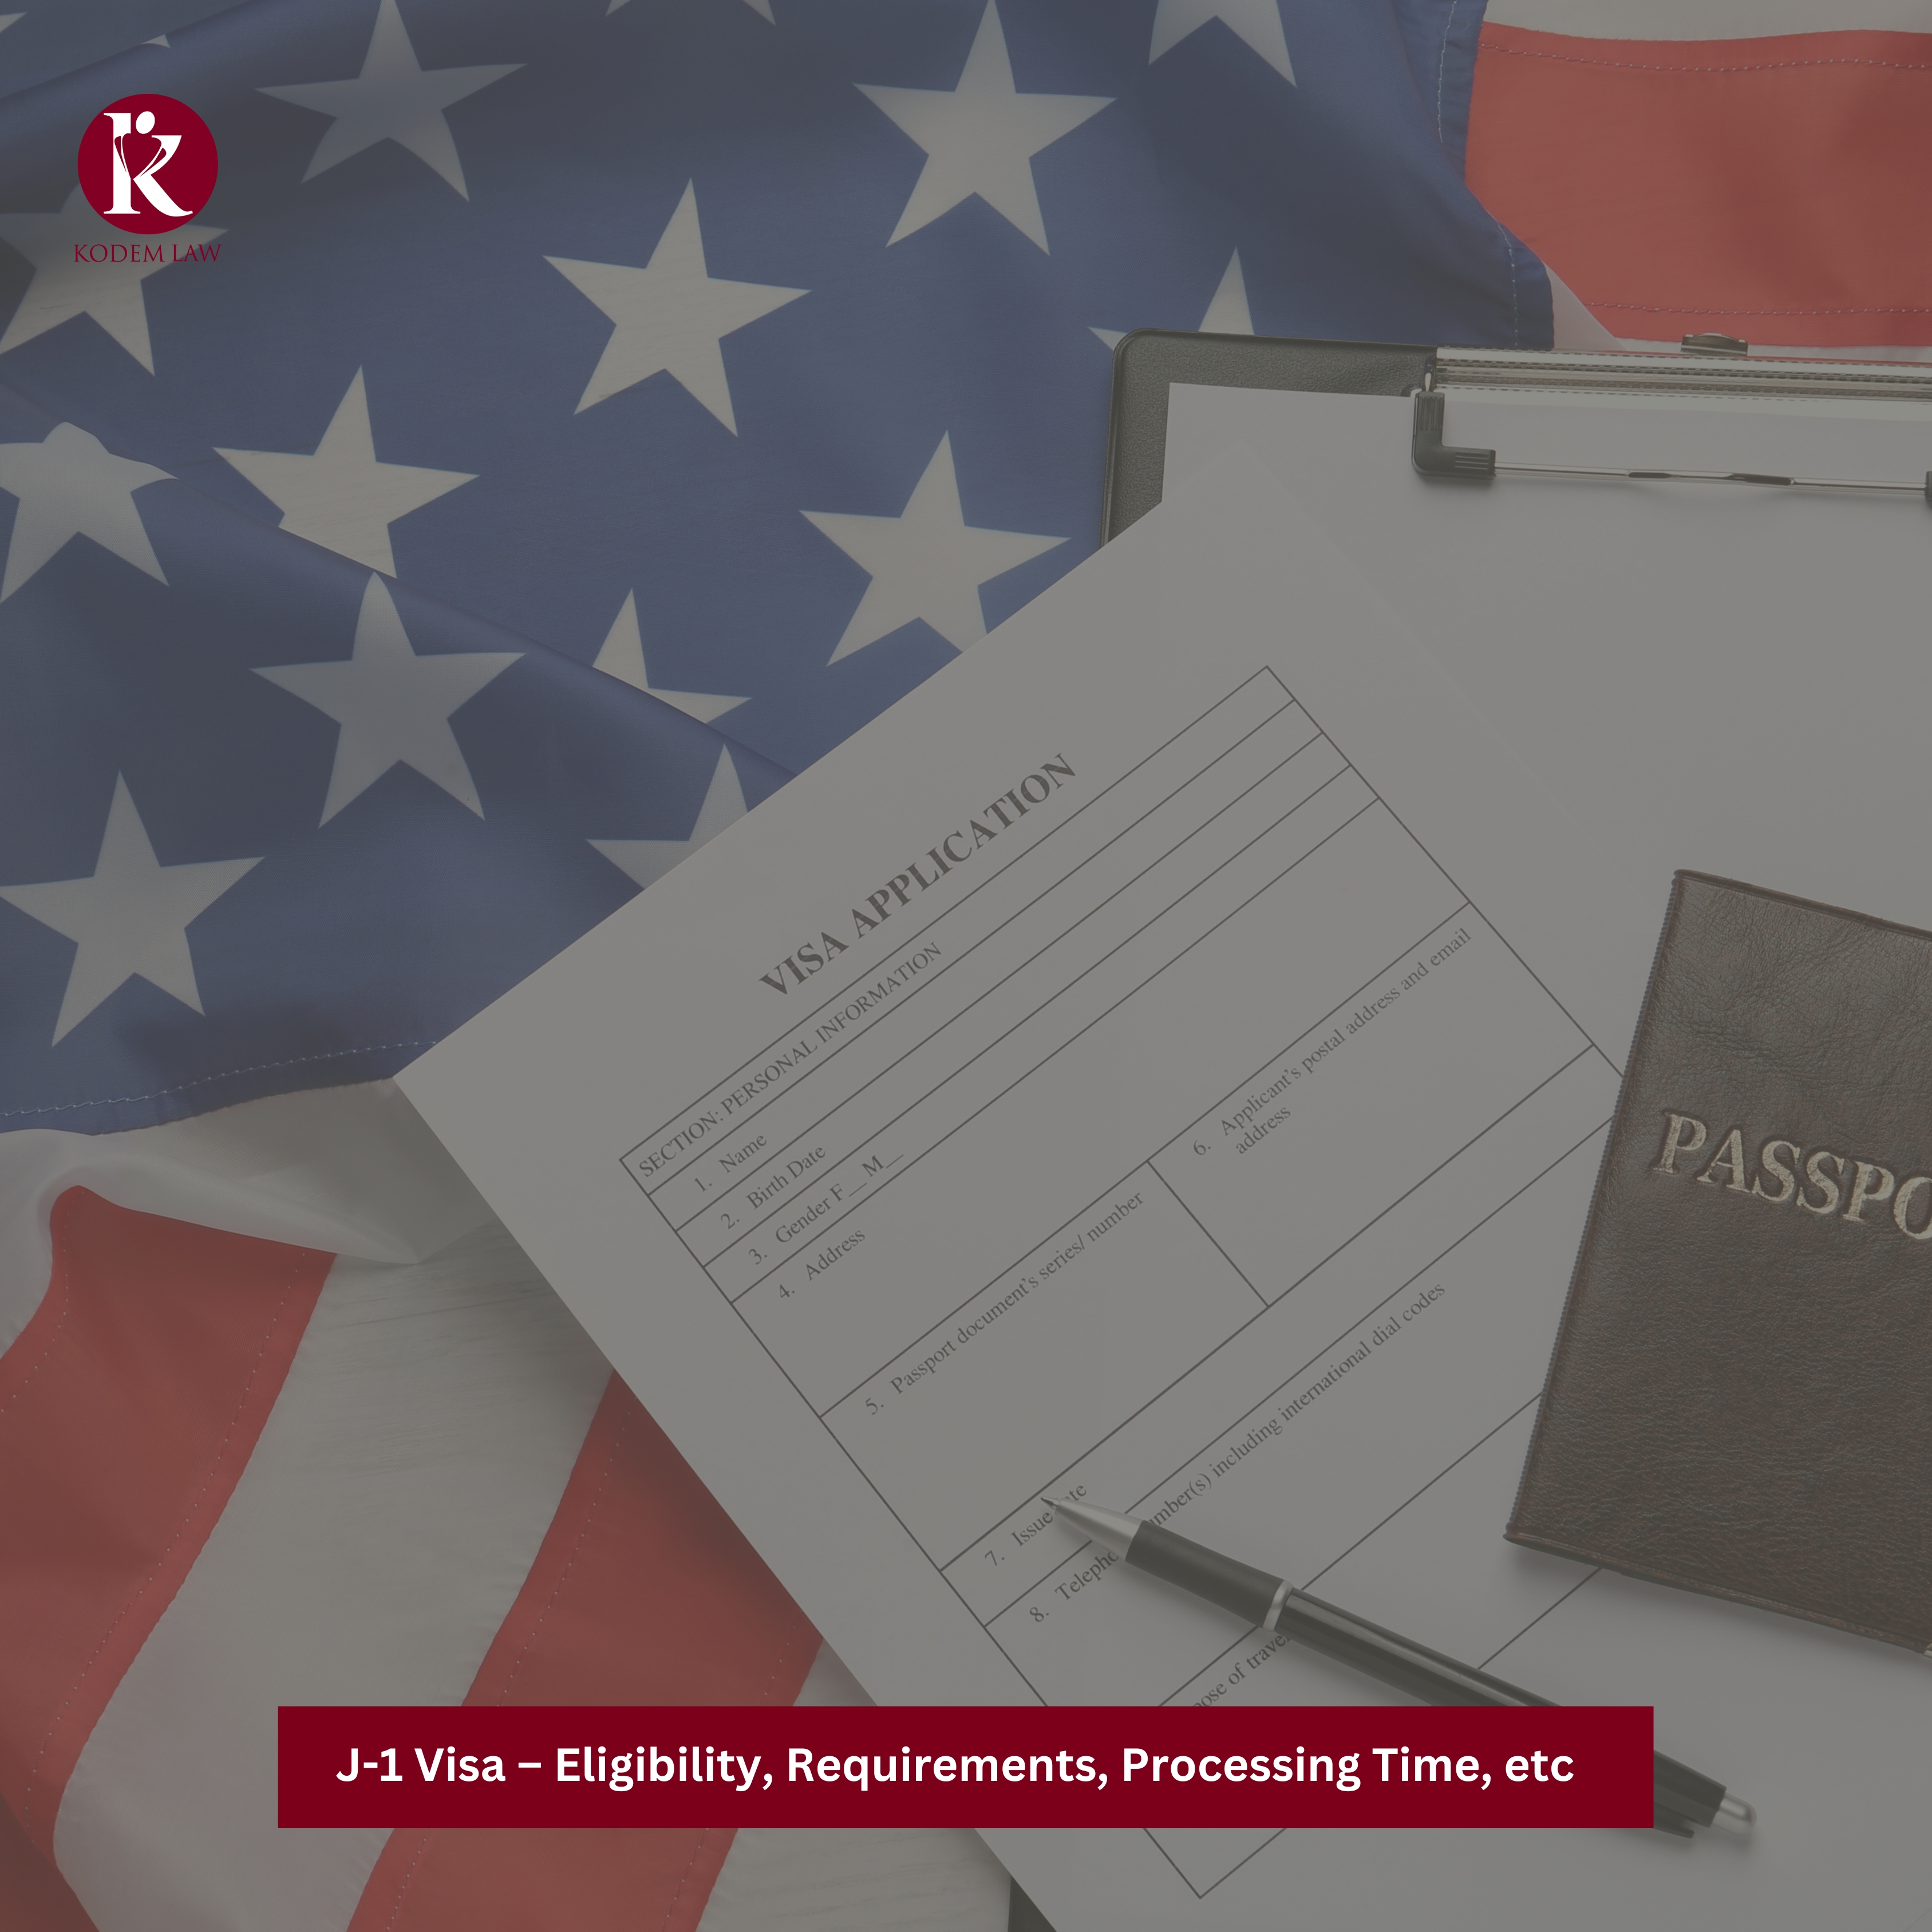 J-1 Visa - Eligibility, Requirements, Processing Time, etc